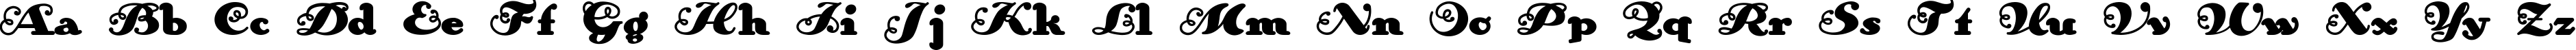 Пример написания английского алфавита шрифтом AnAkronism